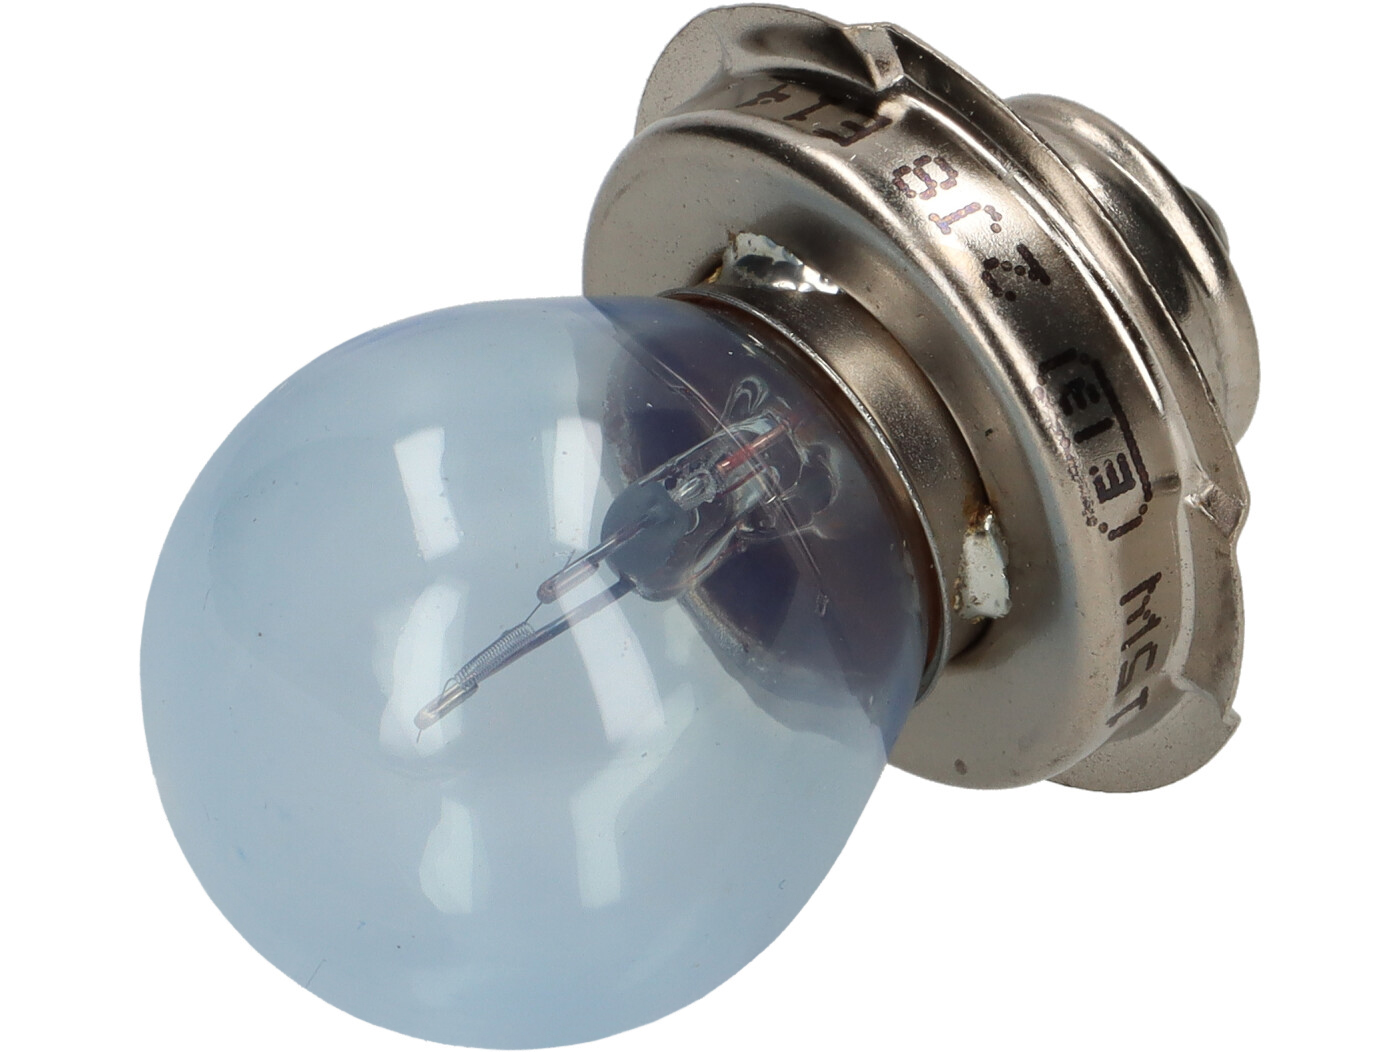 Light bulb -P26s- 12V 15W - blue xenon style, Lamps, Workshop supplies